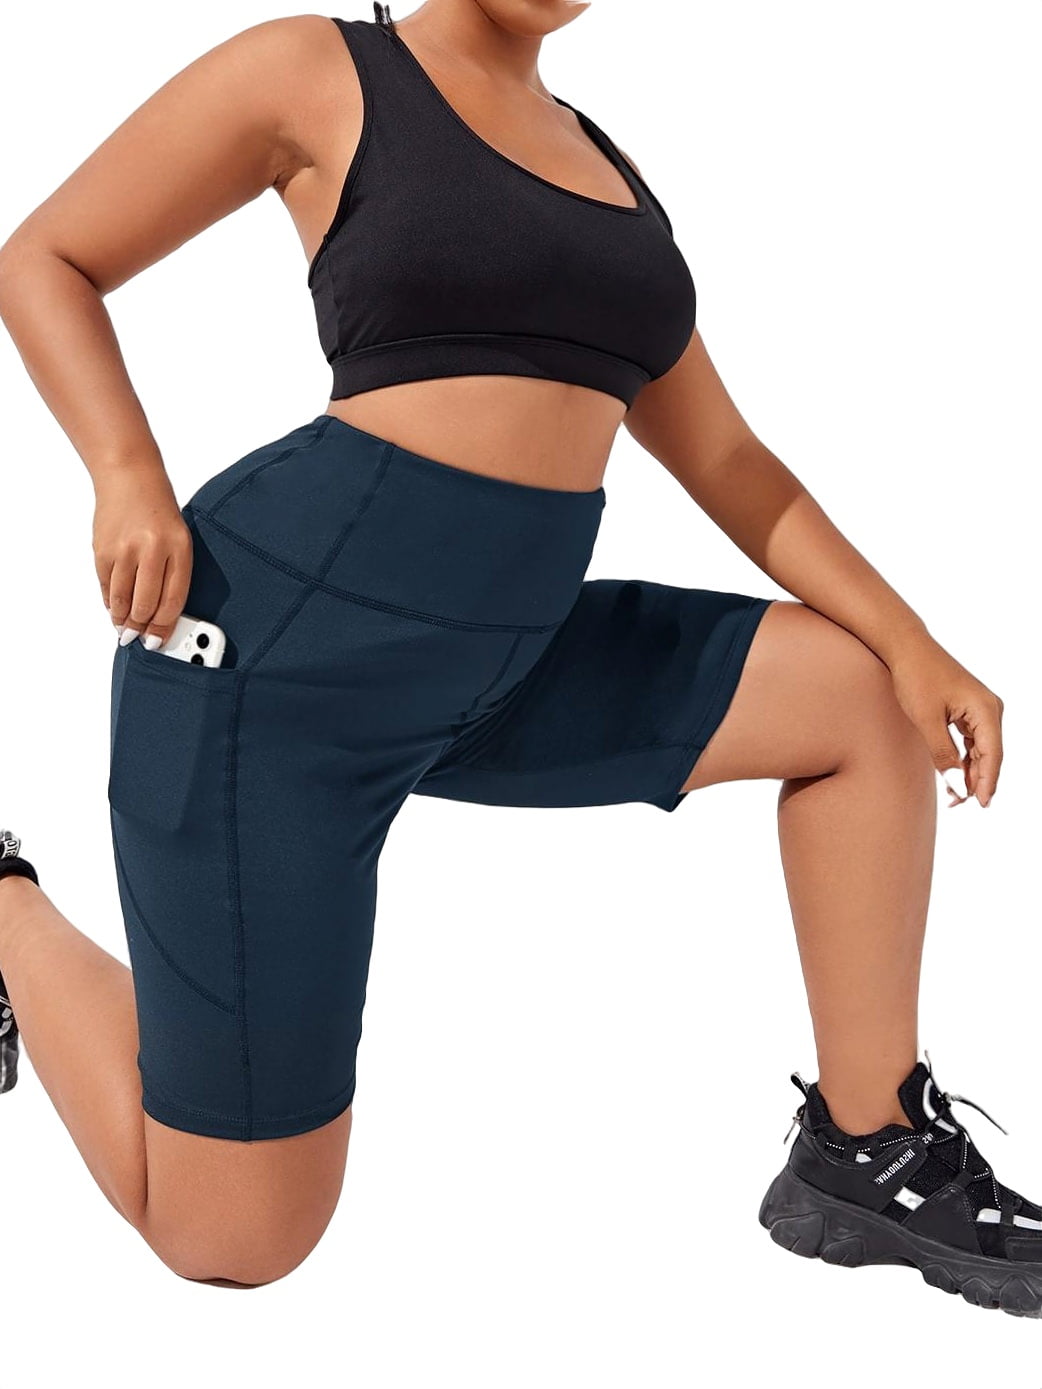 FULLSOFT 4 Pack Biker Shorts for Women – 8 High Waist Tummy Control Workout  Yoga Running Compression Exercise Shorts with Pockets(4 Pack  Black/Black/Black/Black,Large-X-Large) - Yahoo Shopping